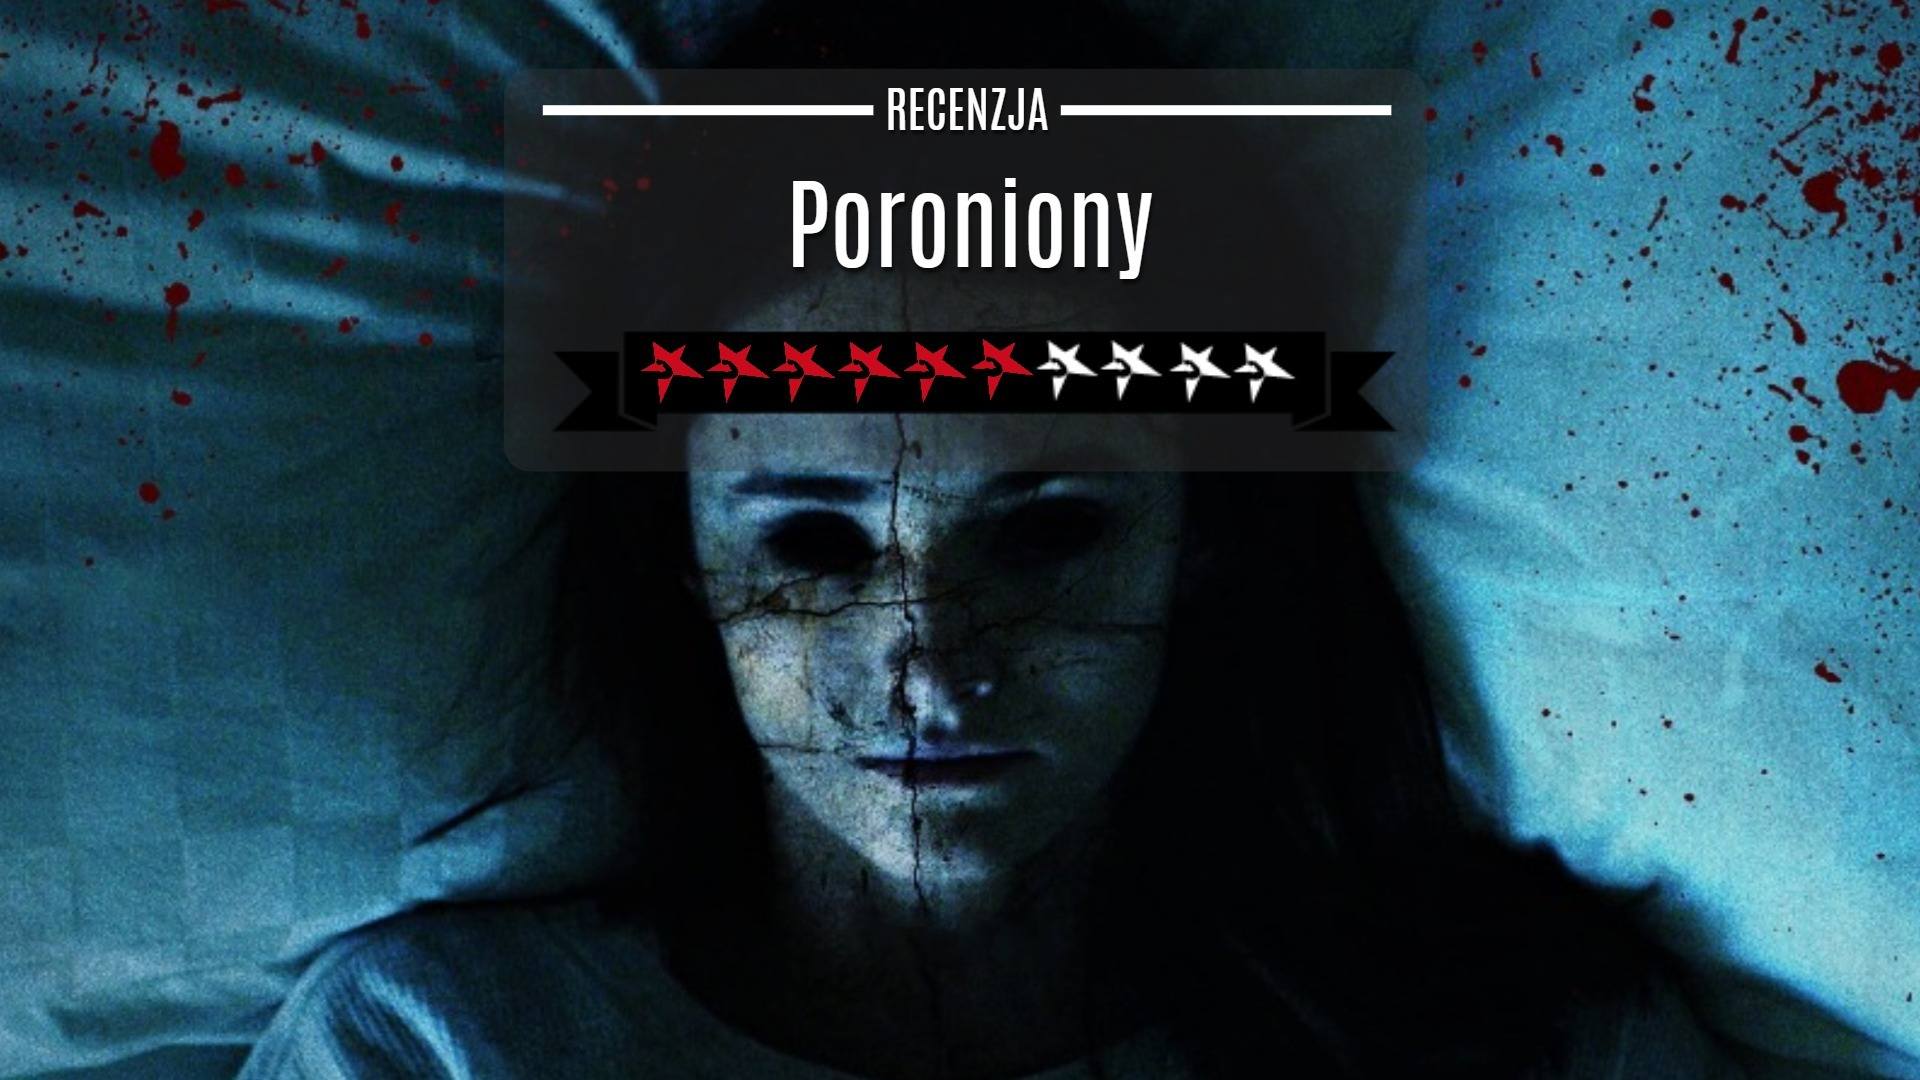 poroniony film poroniony recenzja still/born stillborn poroniony 2017 poroniony 2018 poroniony fest makabra poroniony horror